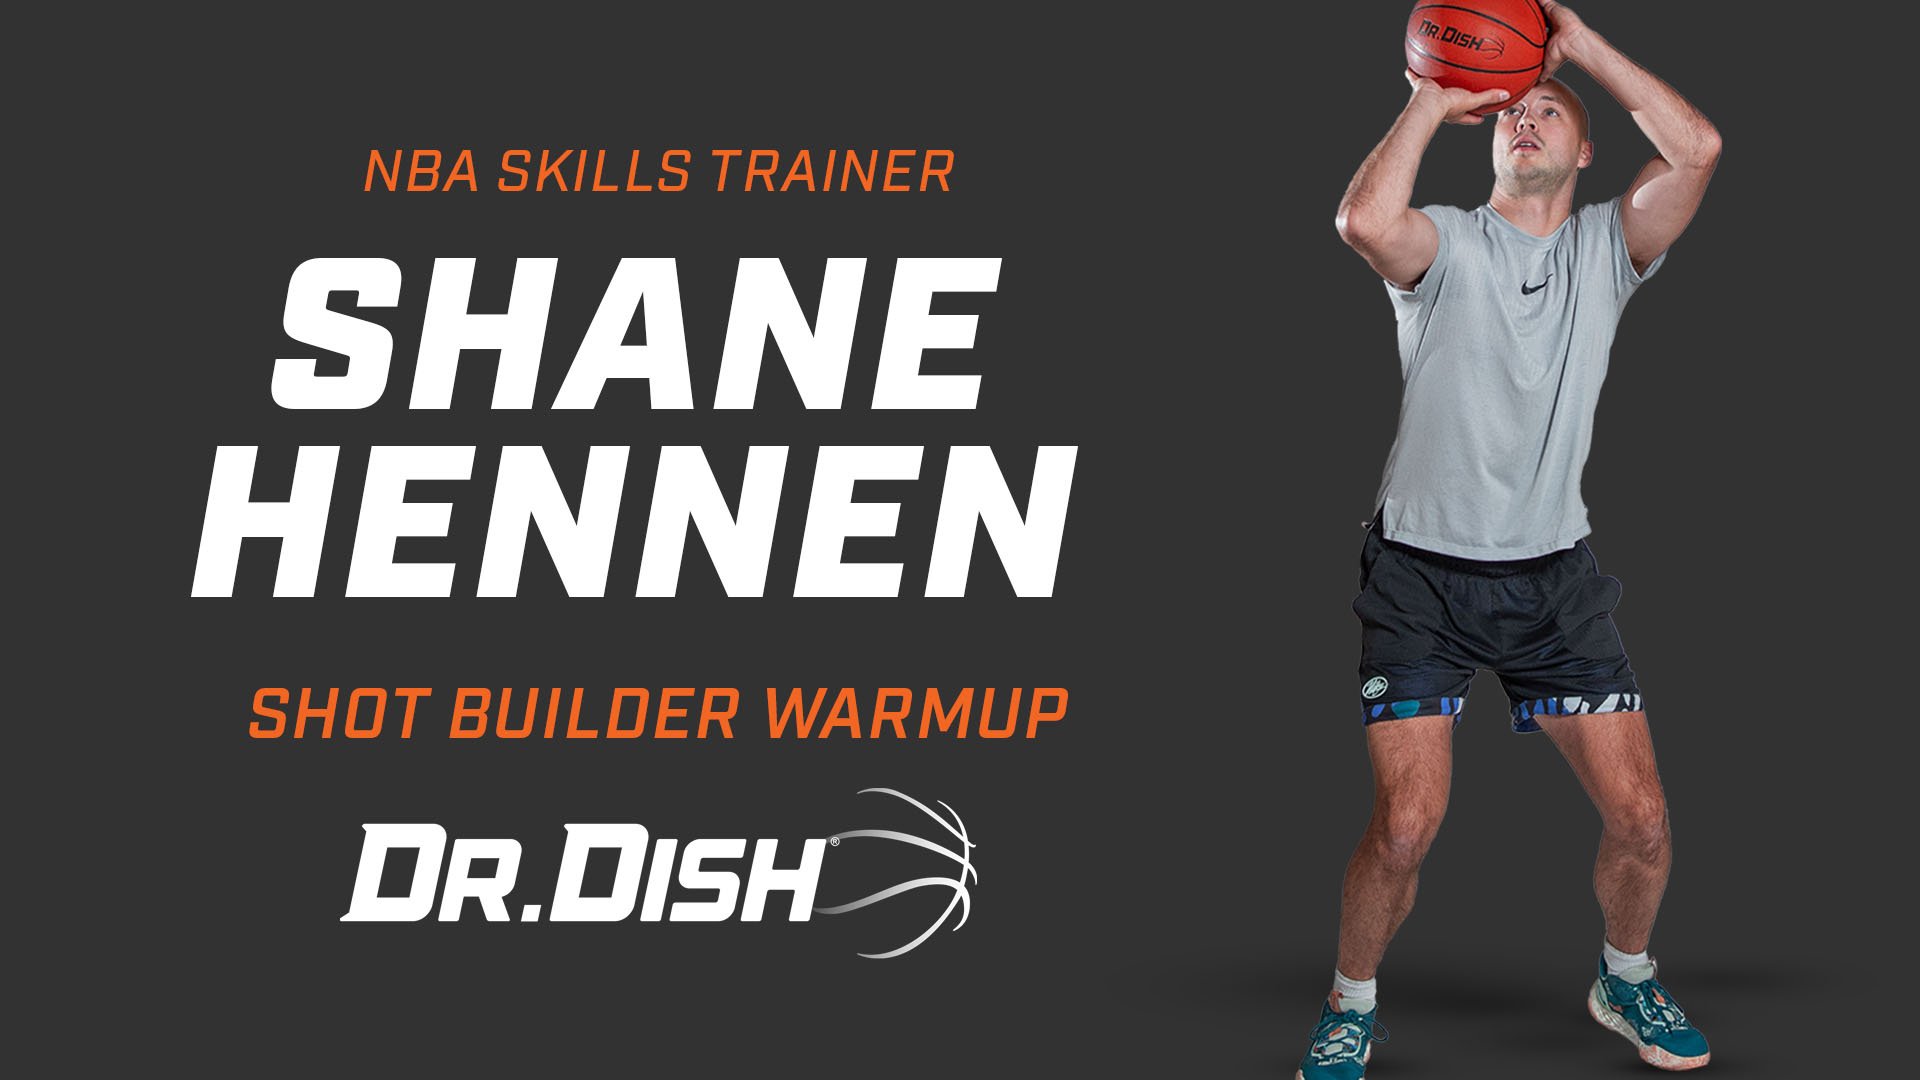 Basketball Drills: Shot Builder Warmup with Shane Hennen